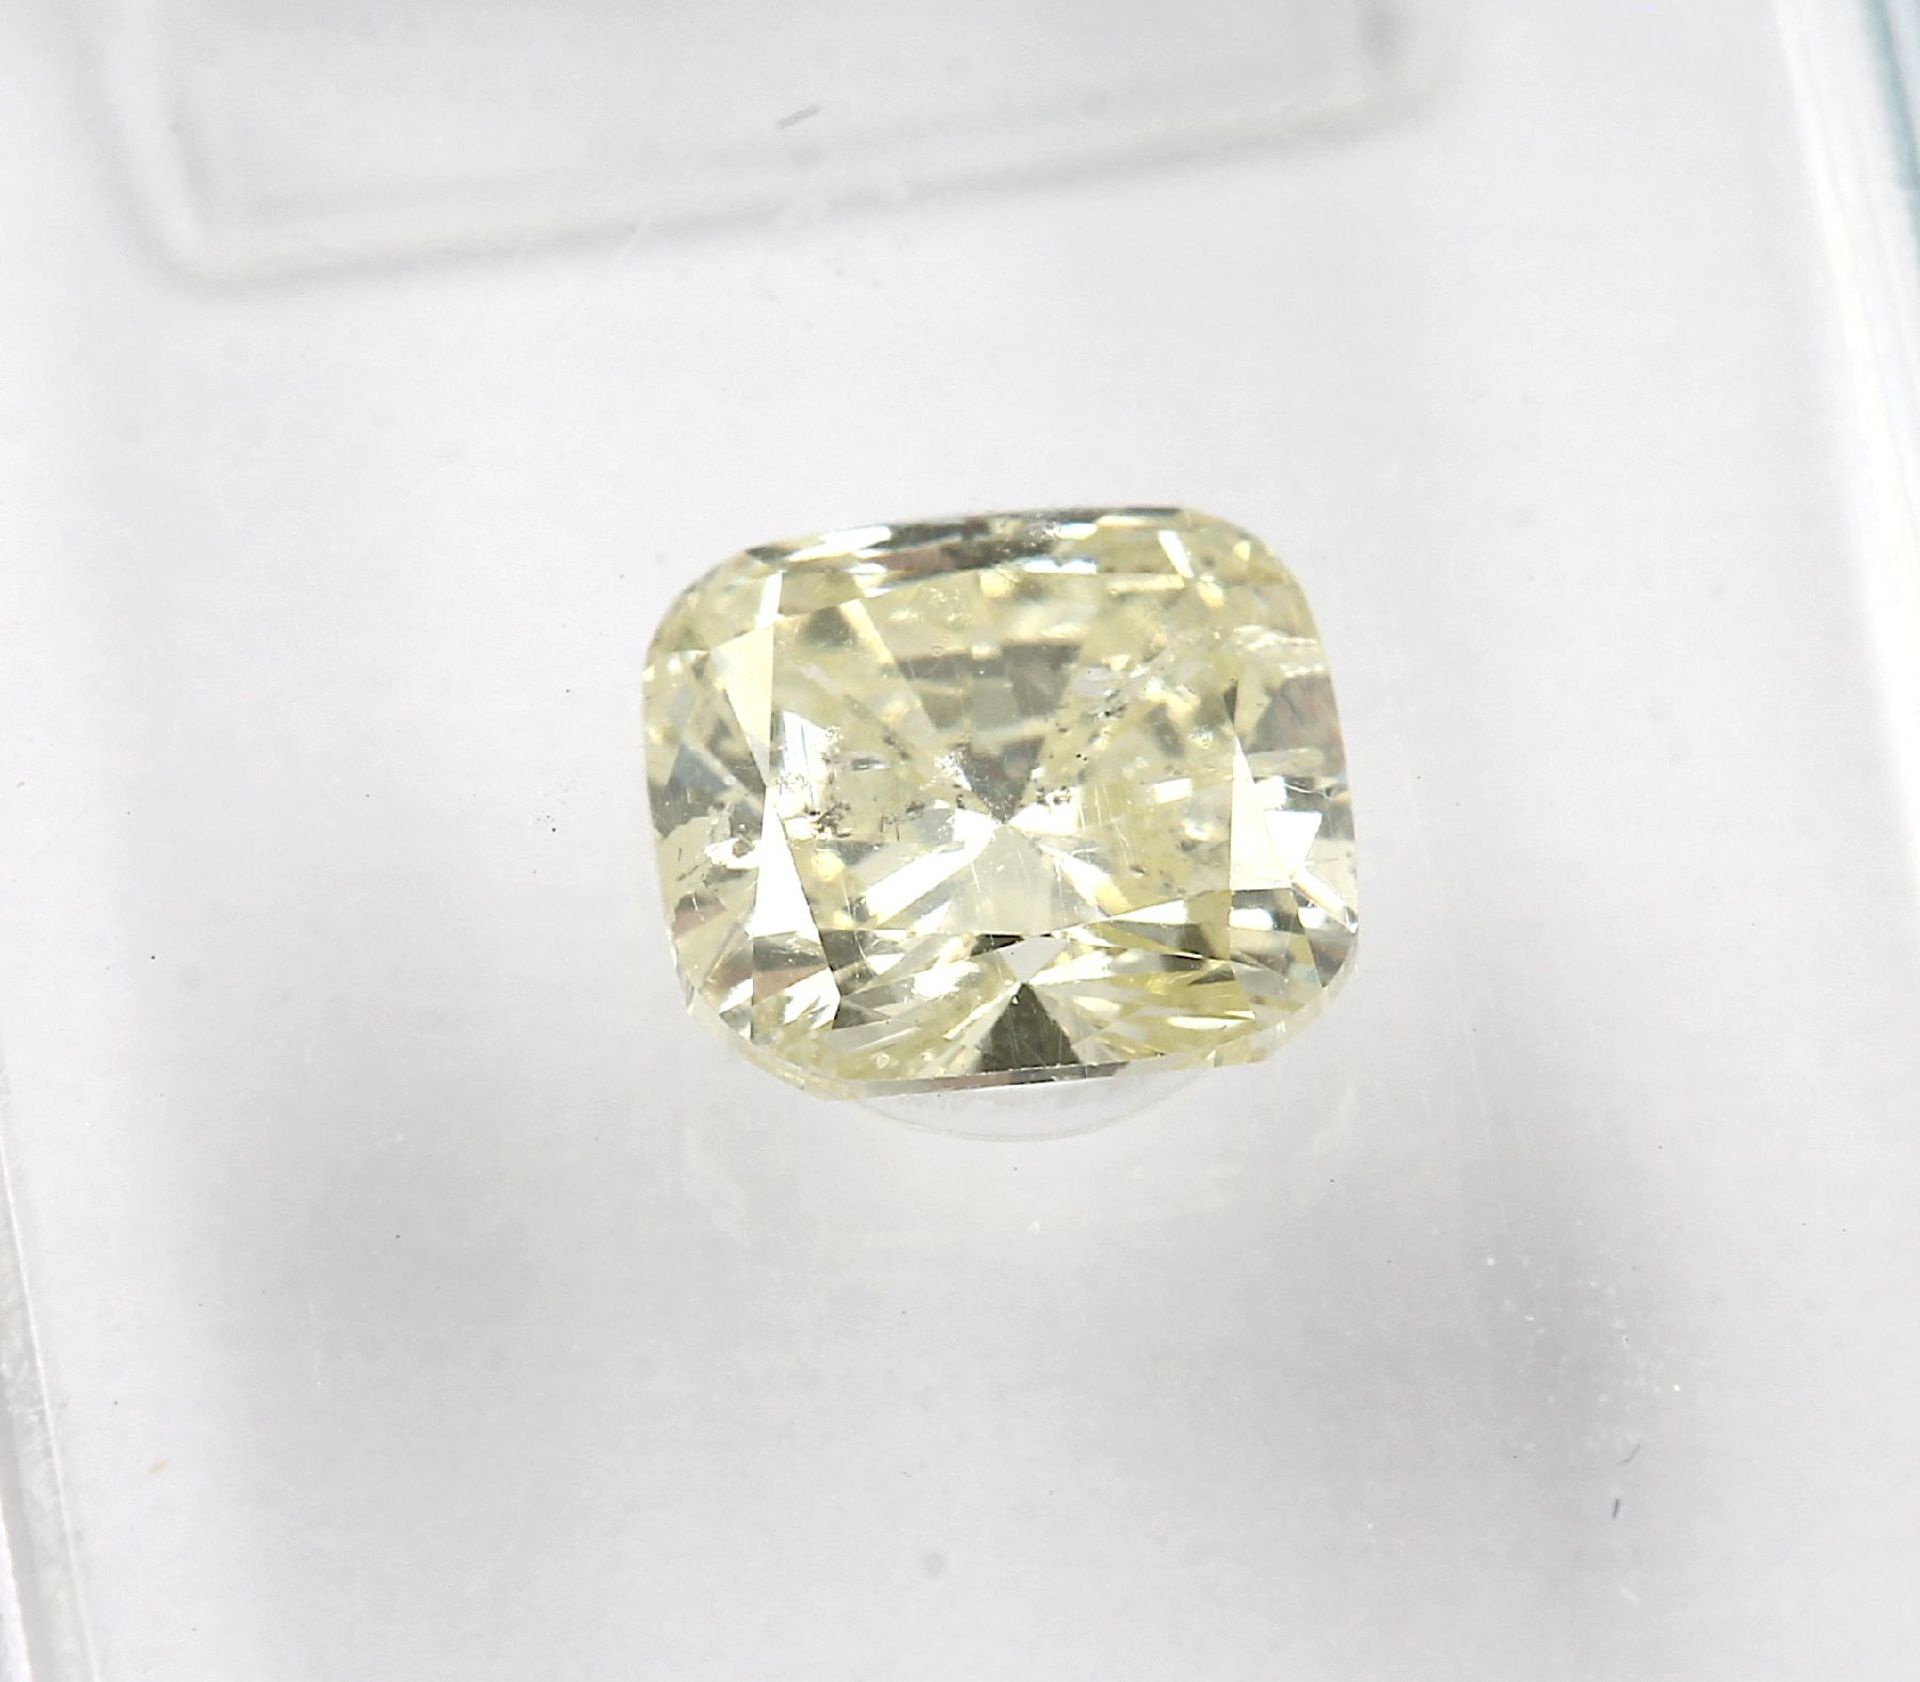 Loser Diamant, 0.70 ct, 5.38 x 4.95 x 3.22 mm, natural fancy yellow/p1, cushion modified - Bild 3 aus 3